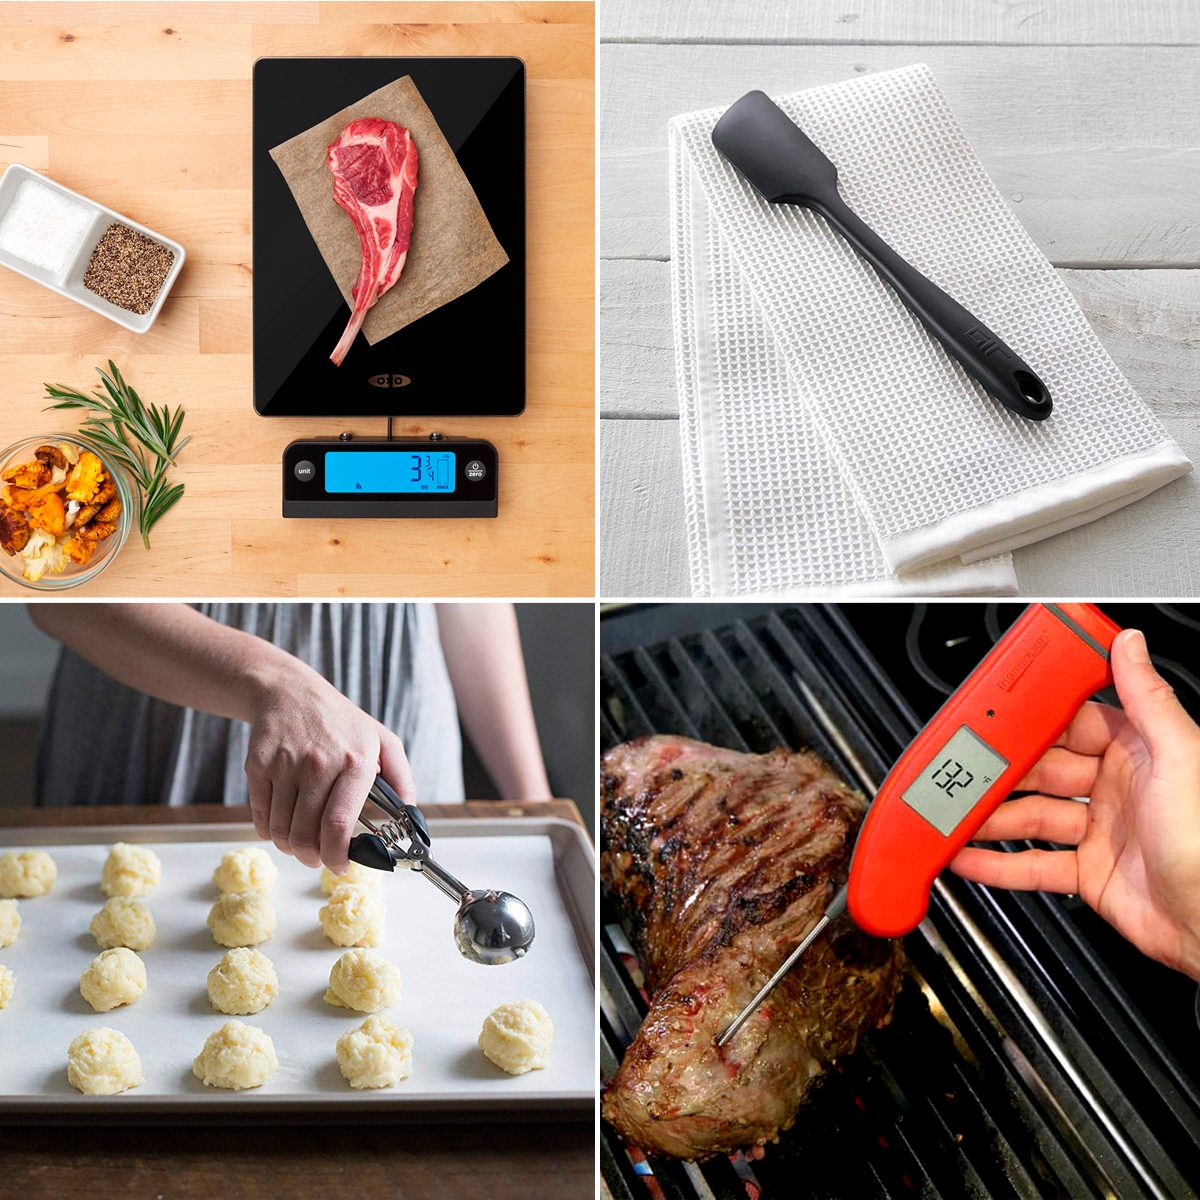 https://www.tasteofhome.com/wp-content/uploads/2018/11/19-Gadgets-Our-Test-Kitchen-Loves-Most1200x1200.jpg